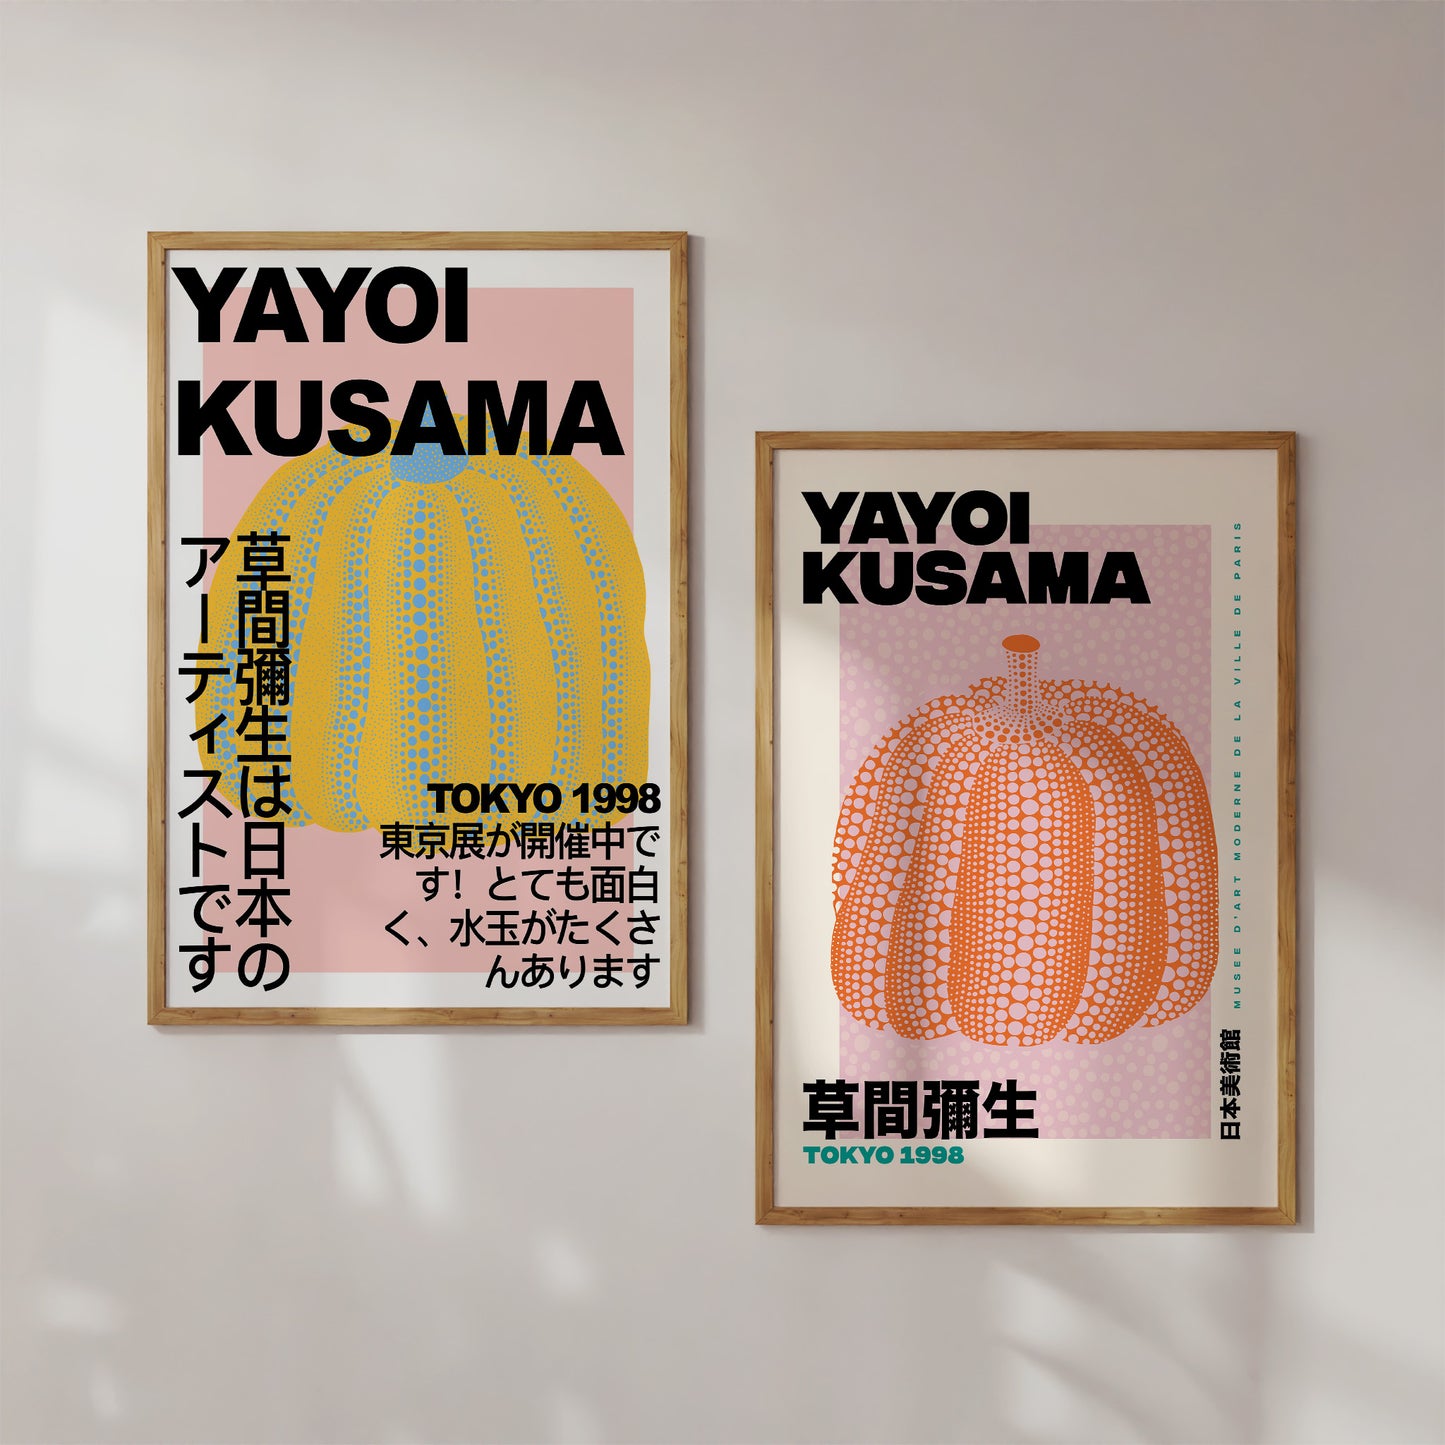 Exhibition Poster Tokyo 1998 by Yayoi Kusama